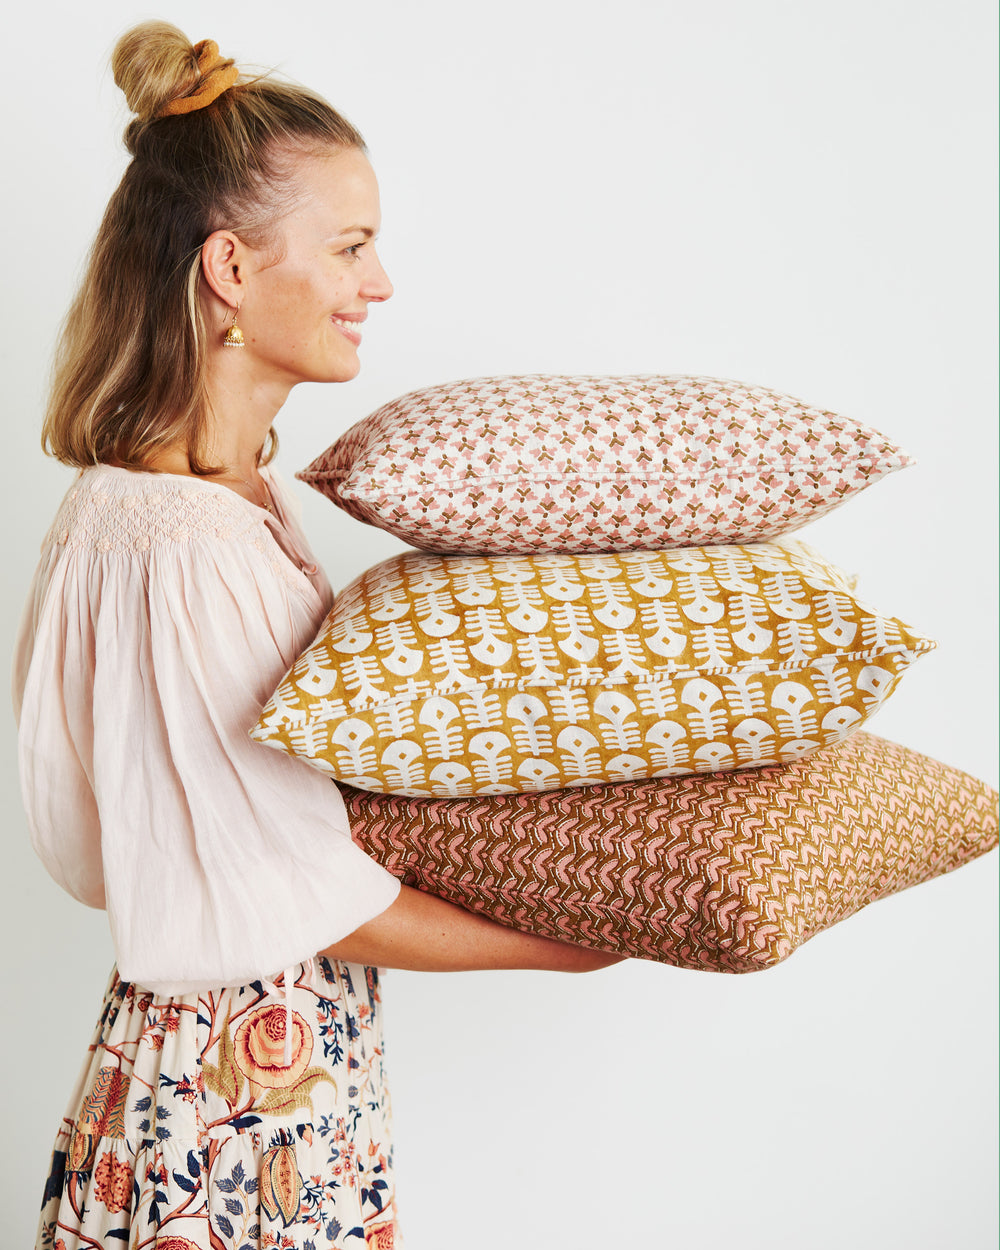 Aswan Musk Pillow